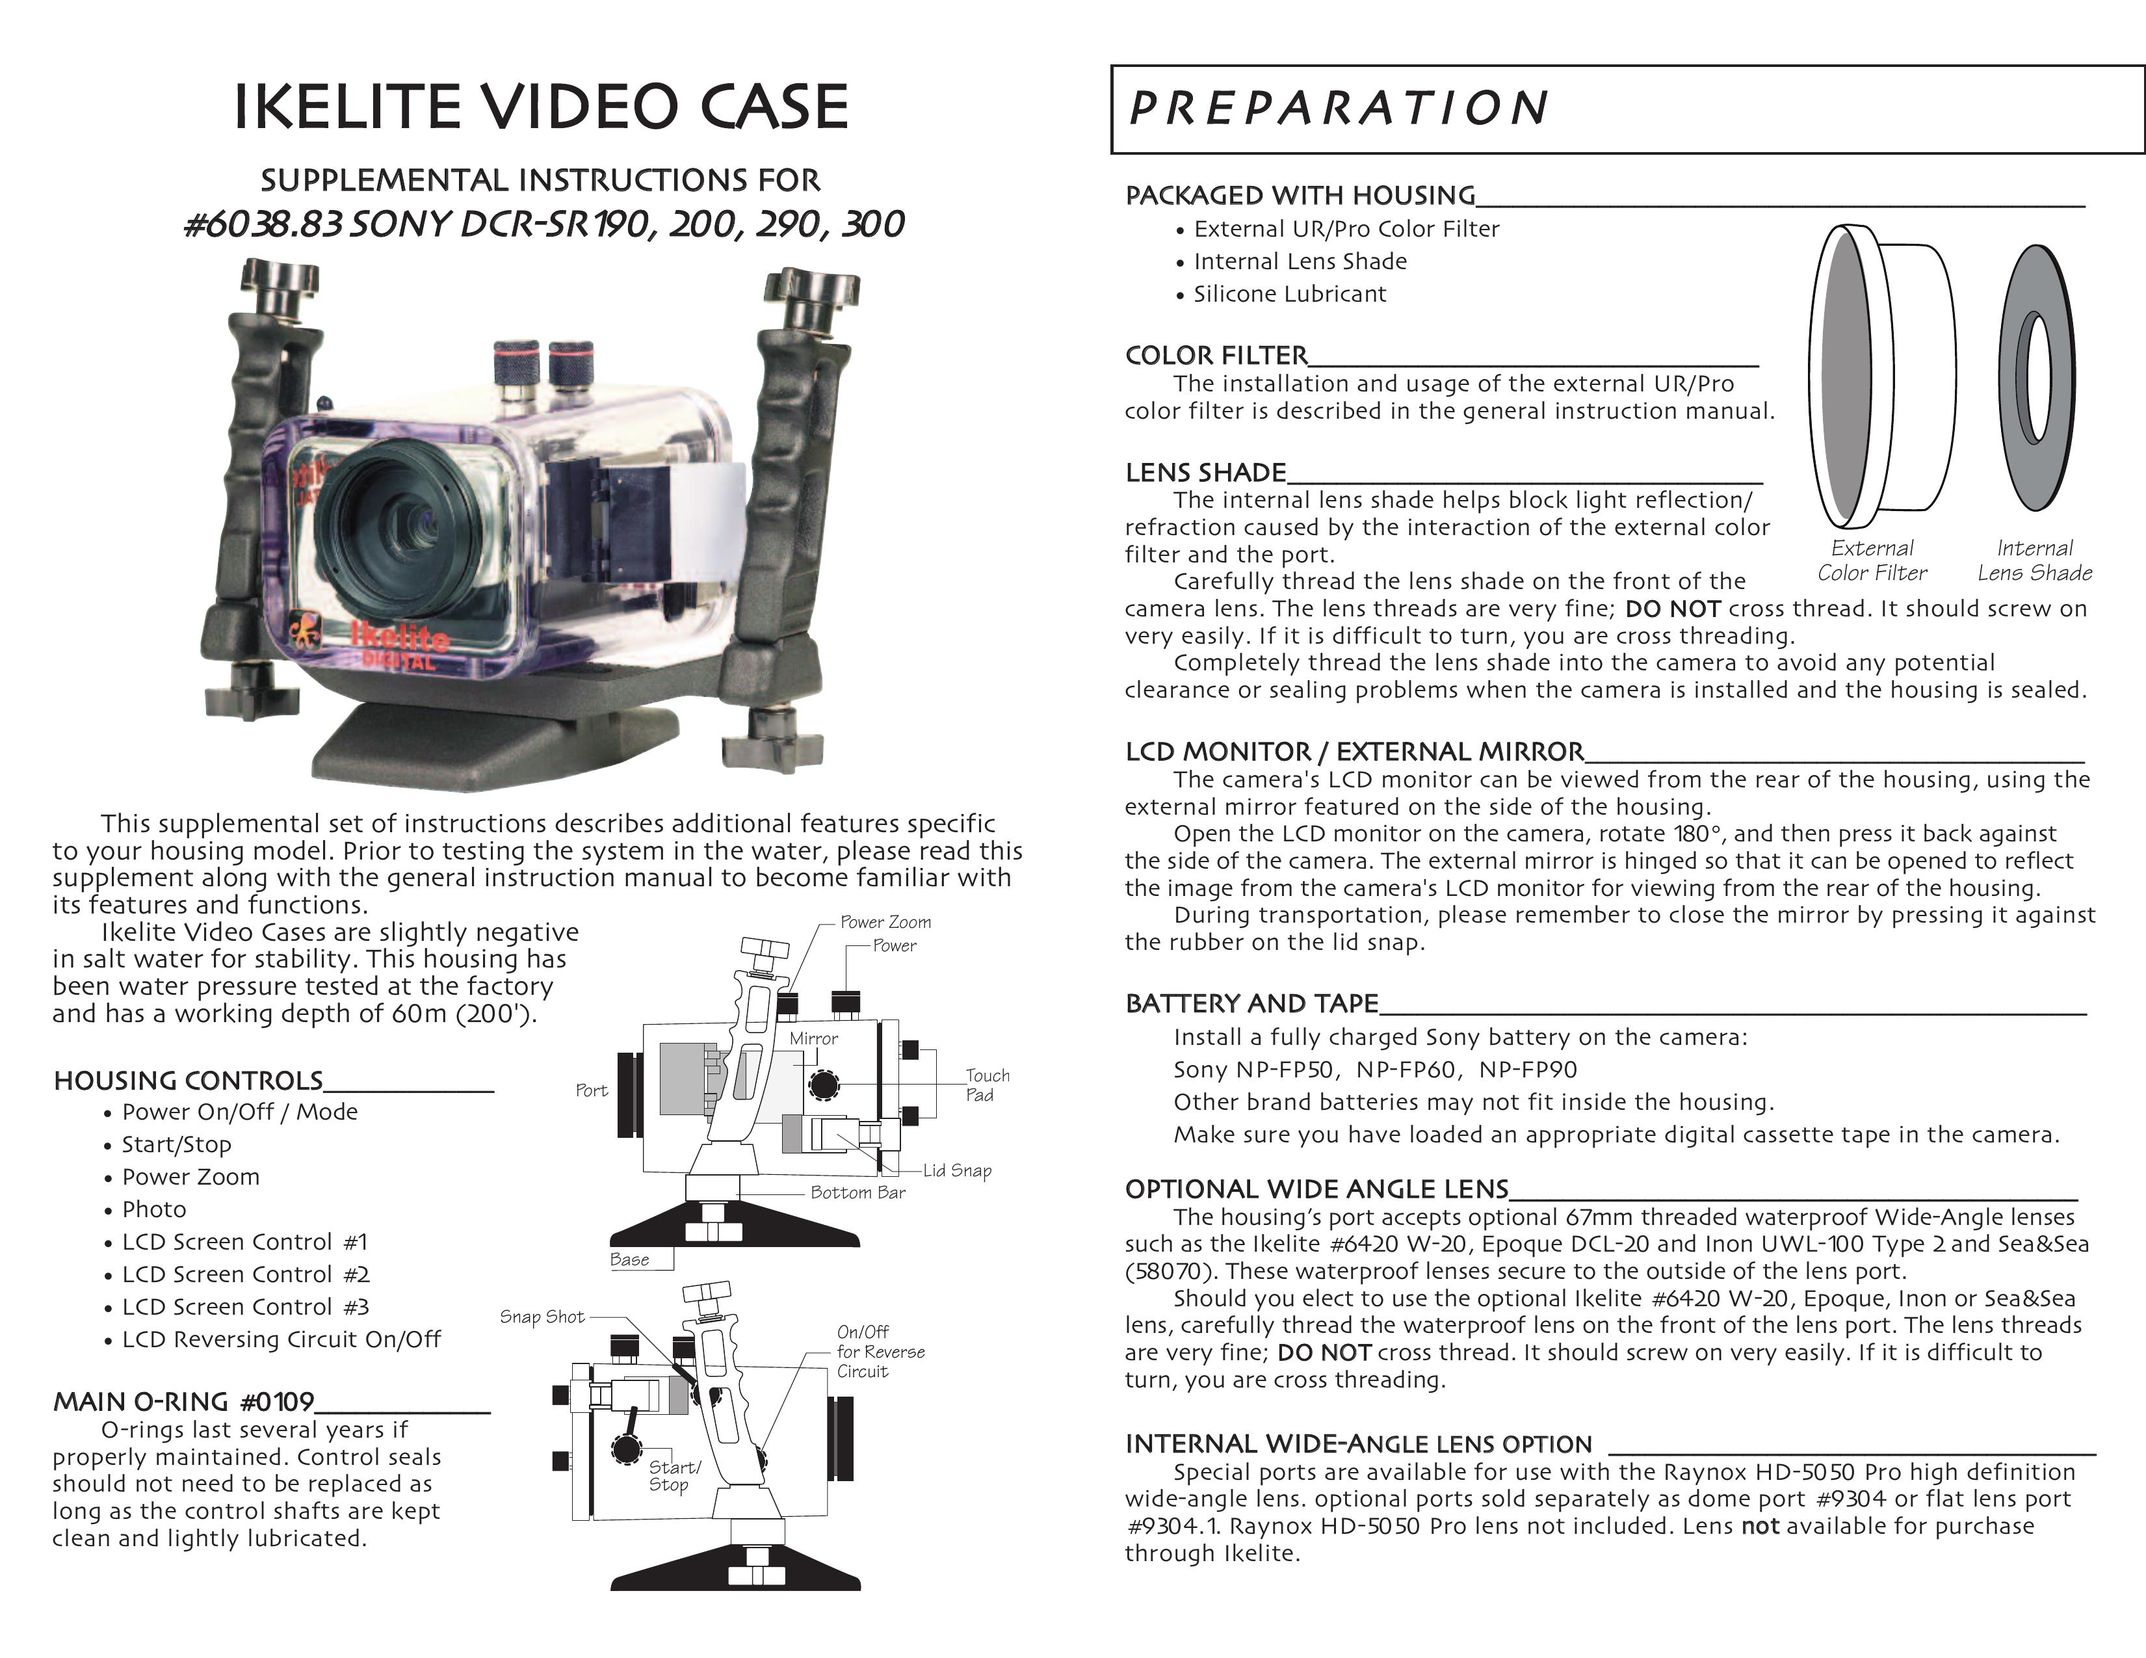 Ikelite DCR-SR300 Carrying Case User Manual